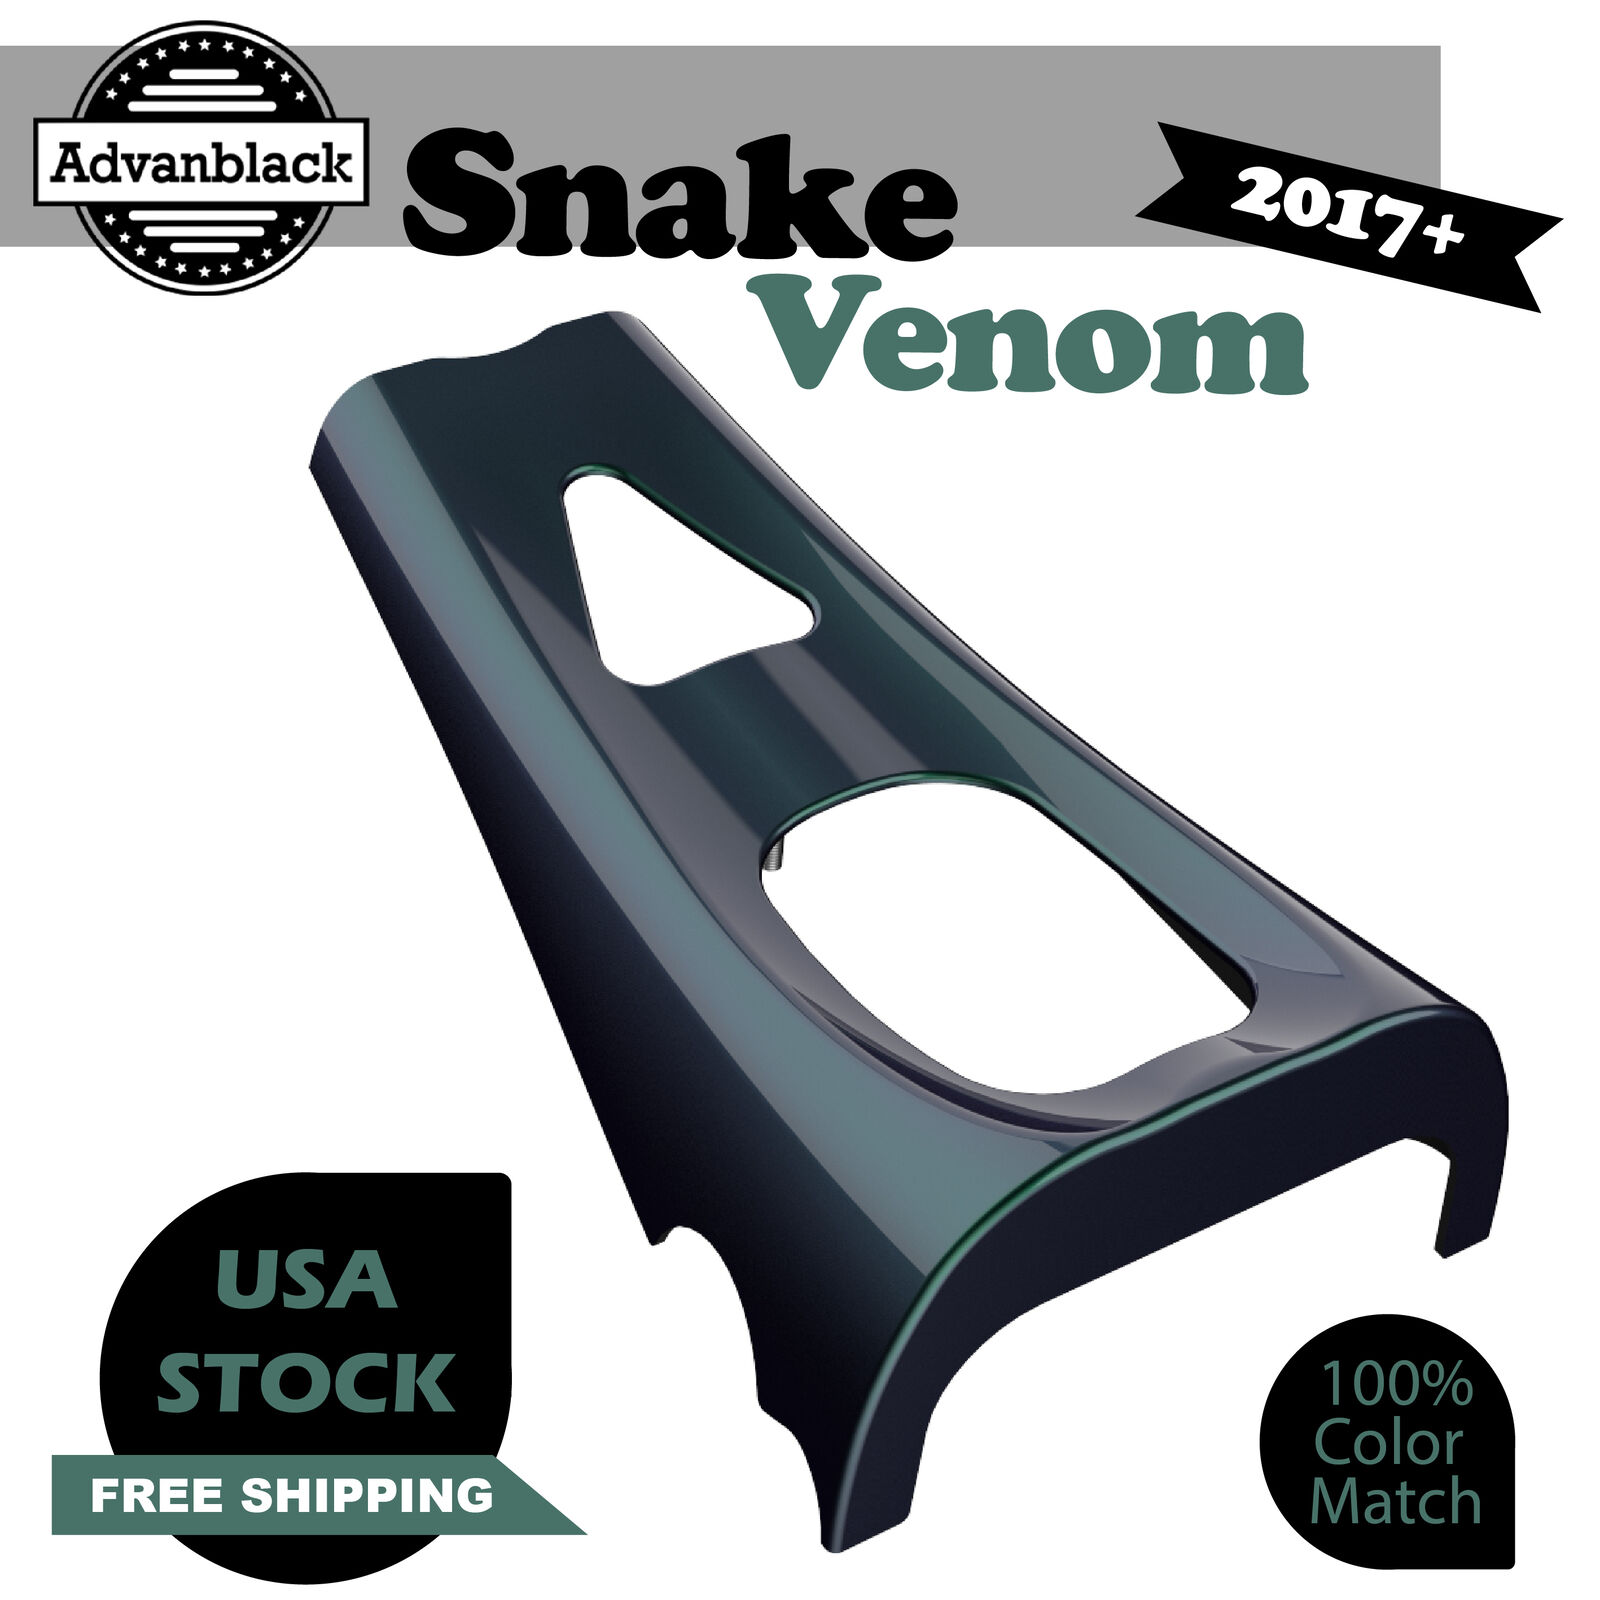 Snake Venom ABS Chin Spoiler Fits 2017+ M8 Harley Street Road King Glide